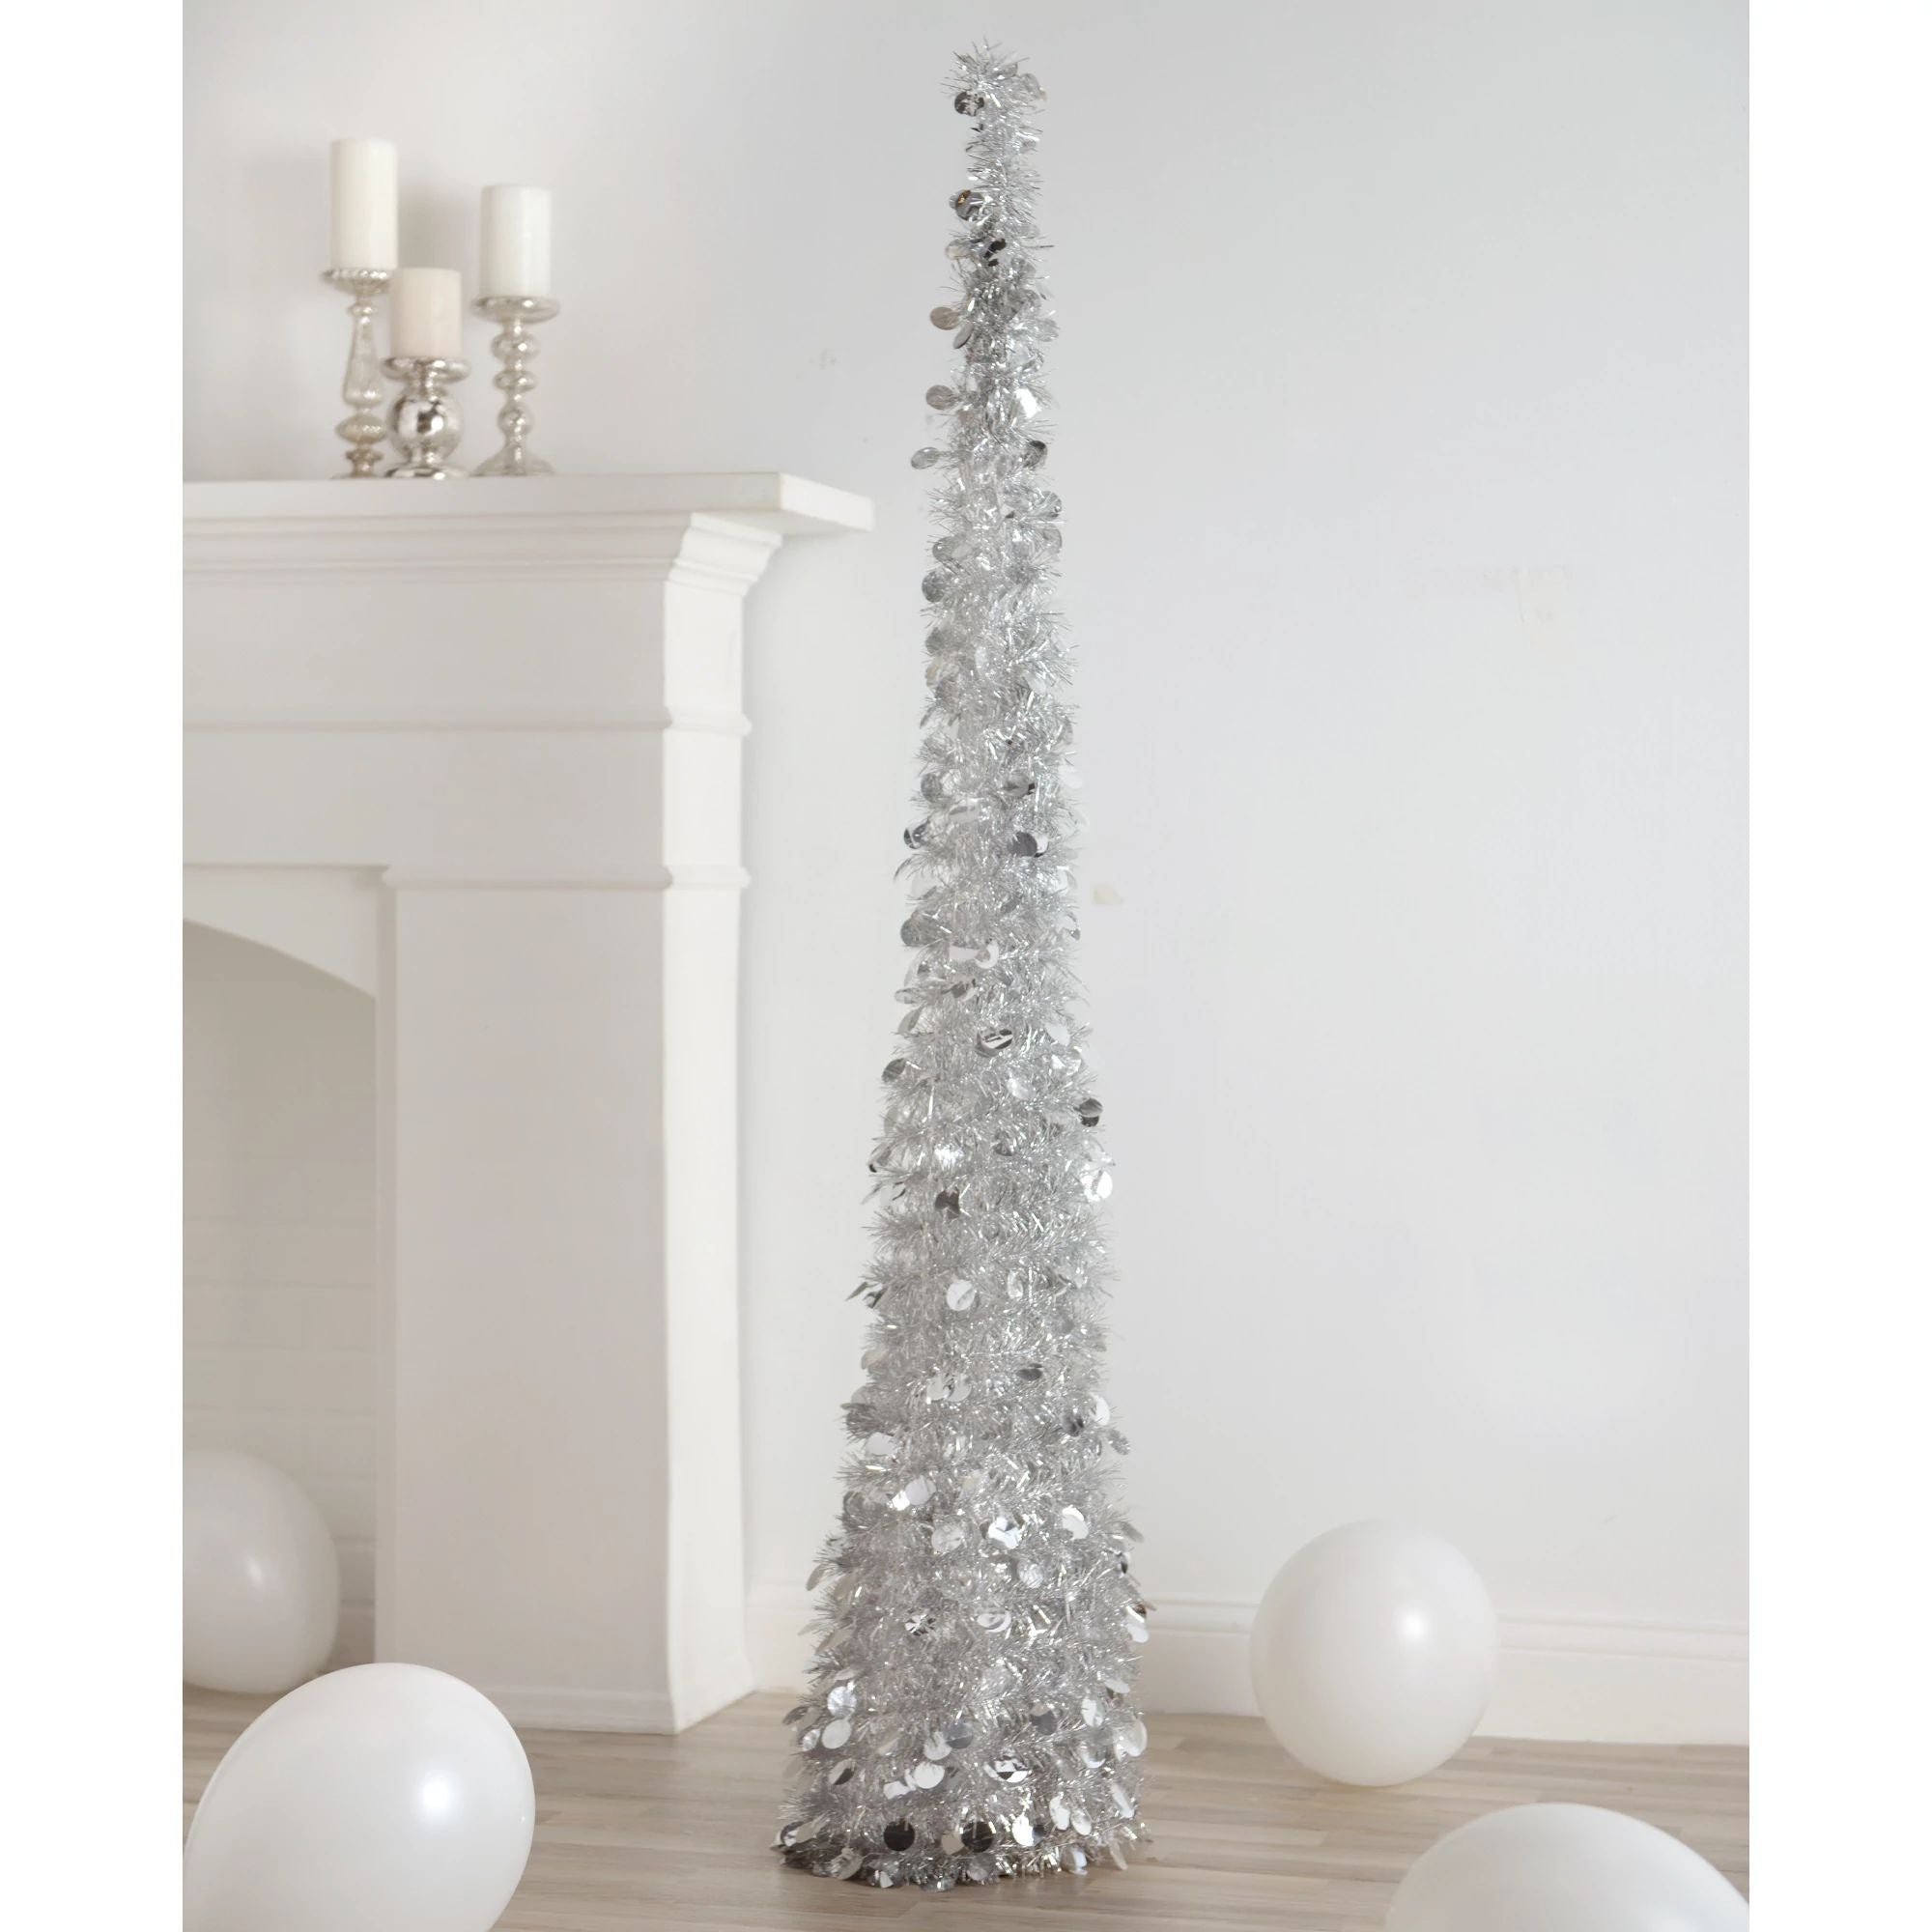 Amscan HOLIDAY: CHRISTMAS Collapsible Tinsel Tree - Silver